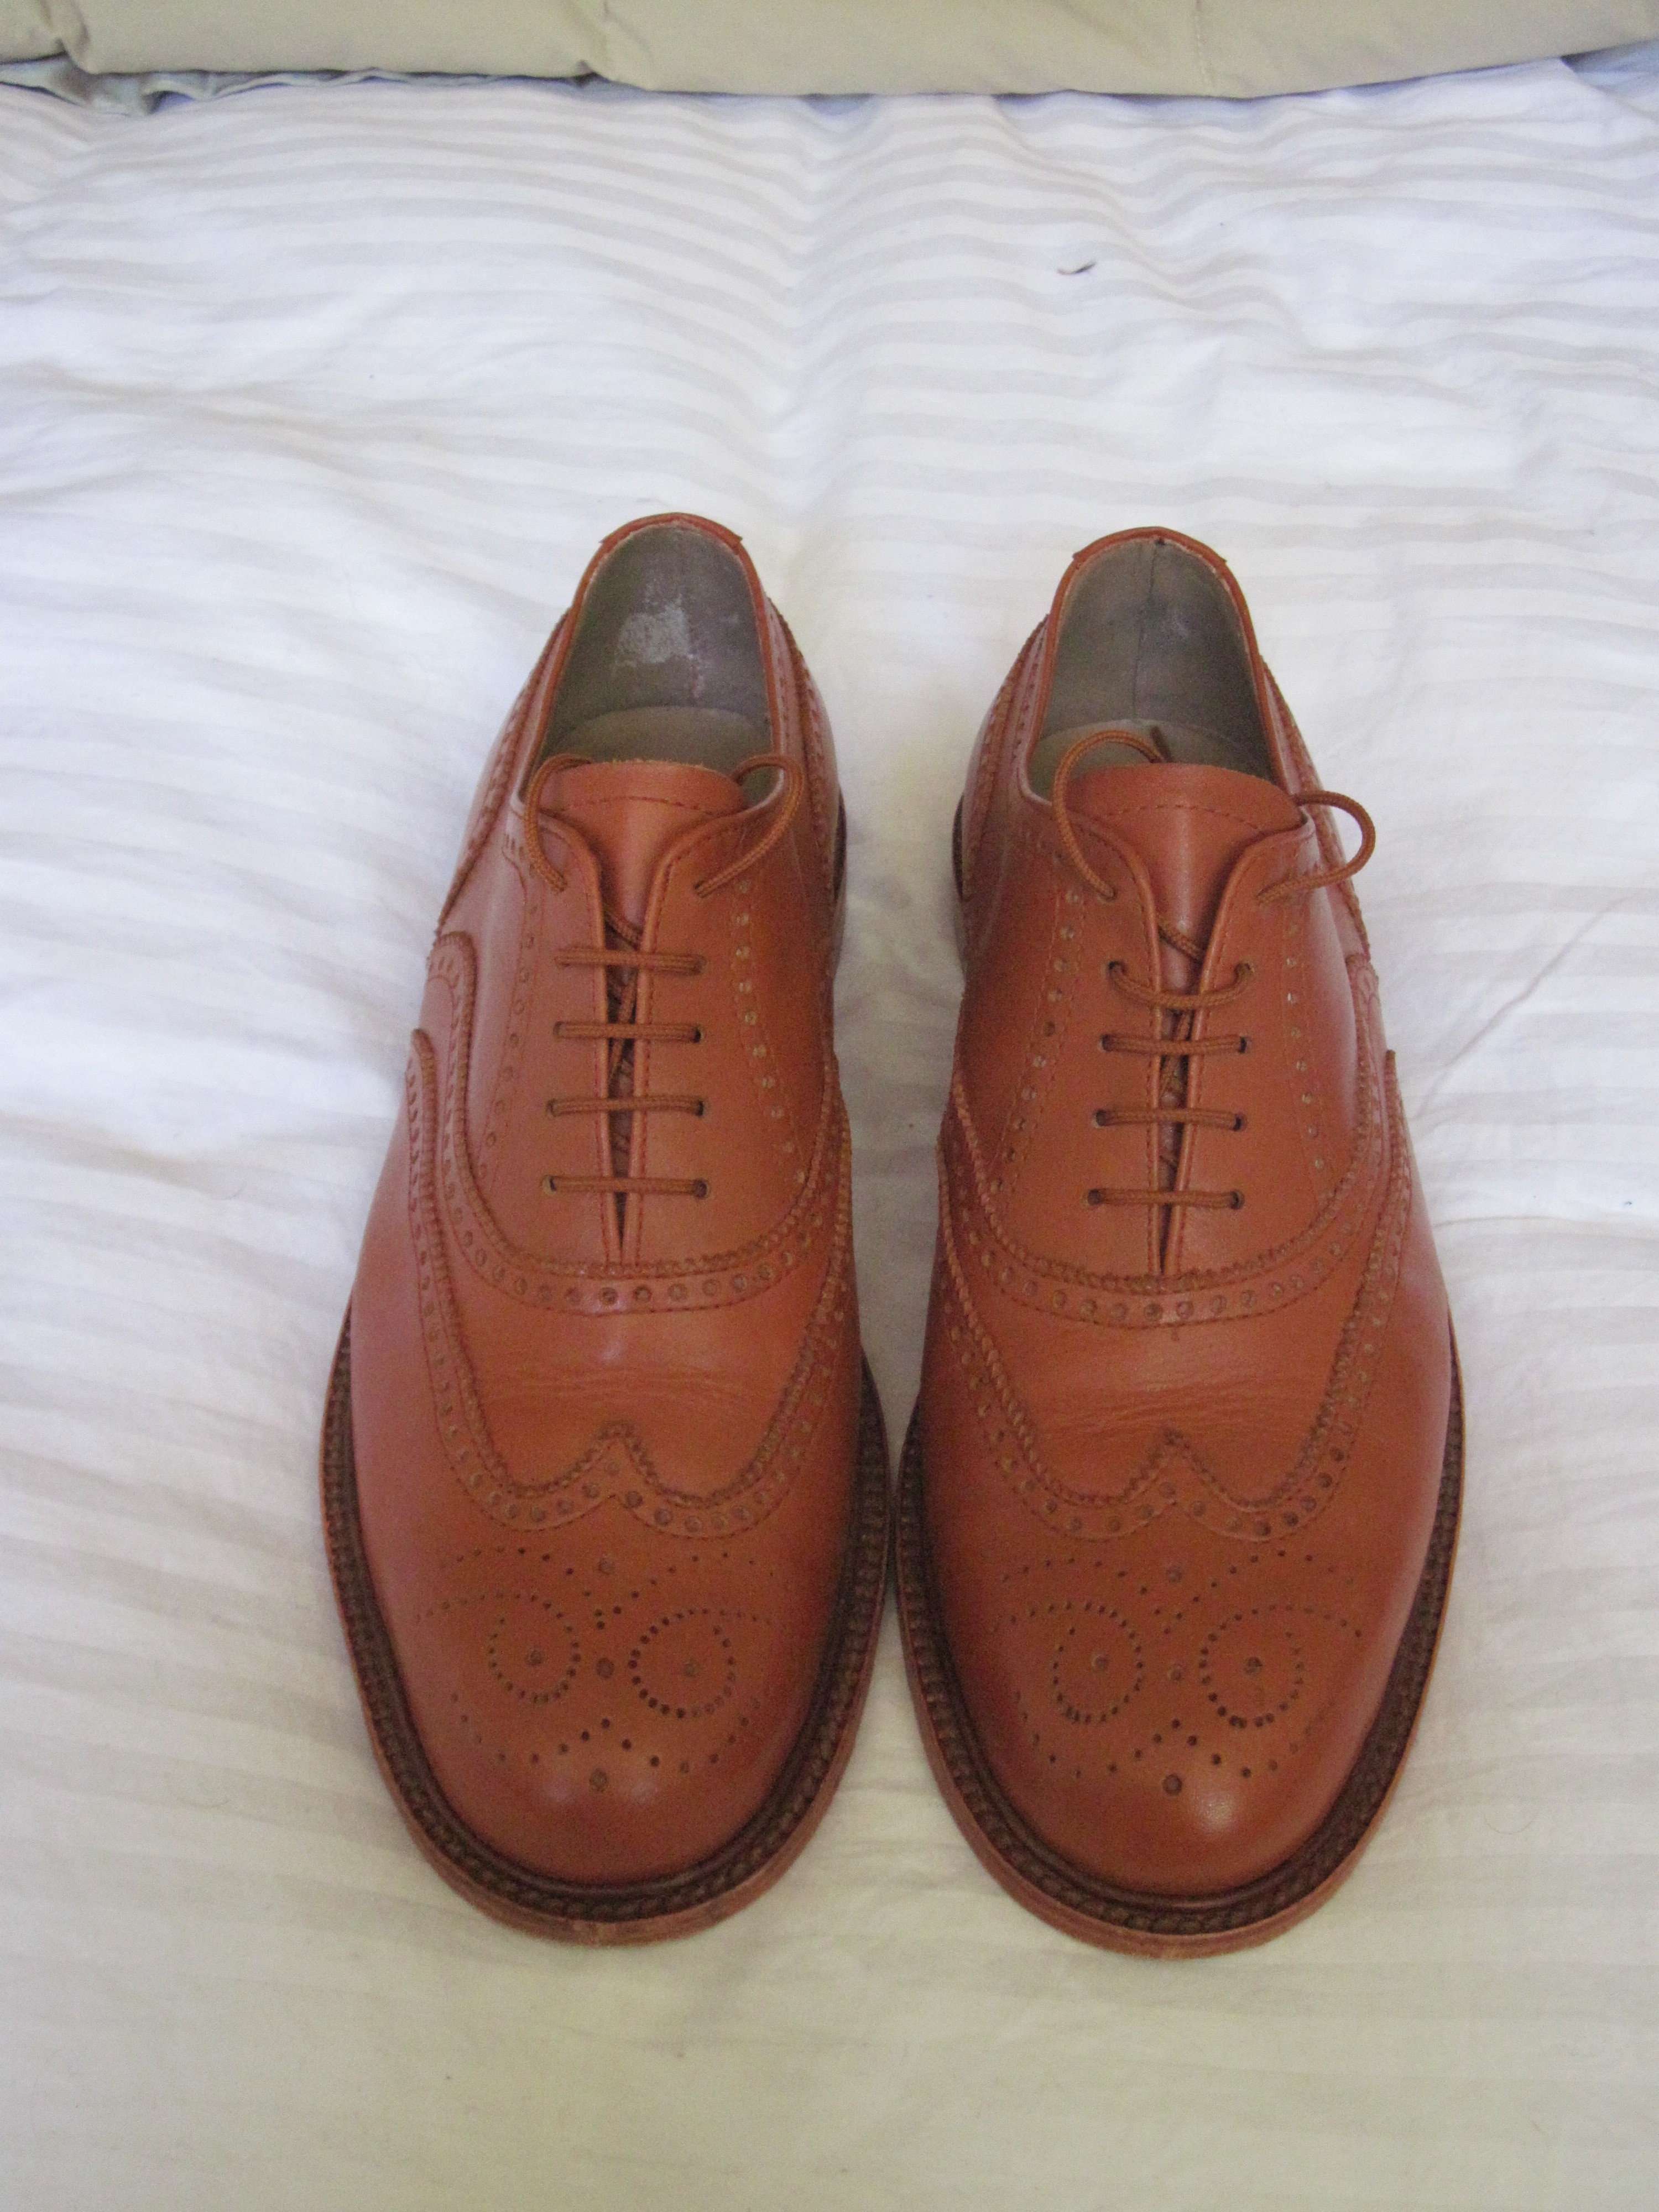 Review: Calzado Pepay - Bespoke Shoes, Santiago, Chile | Styleforum